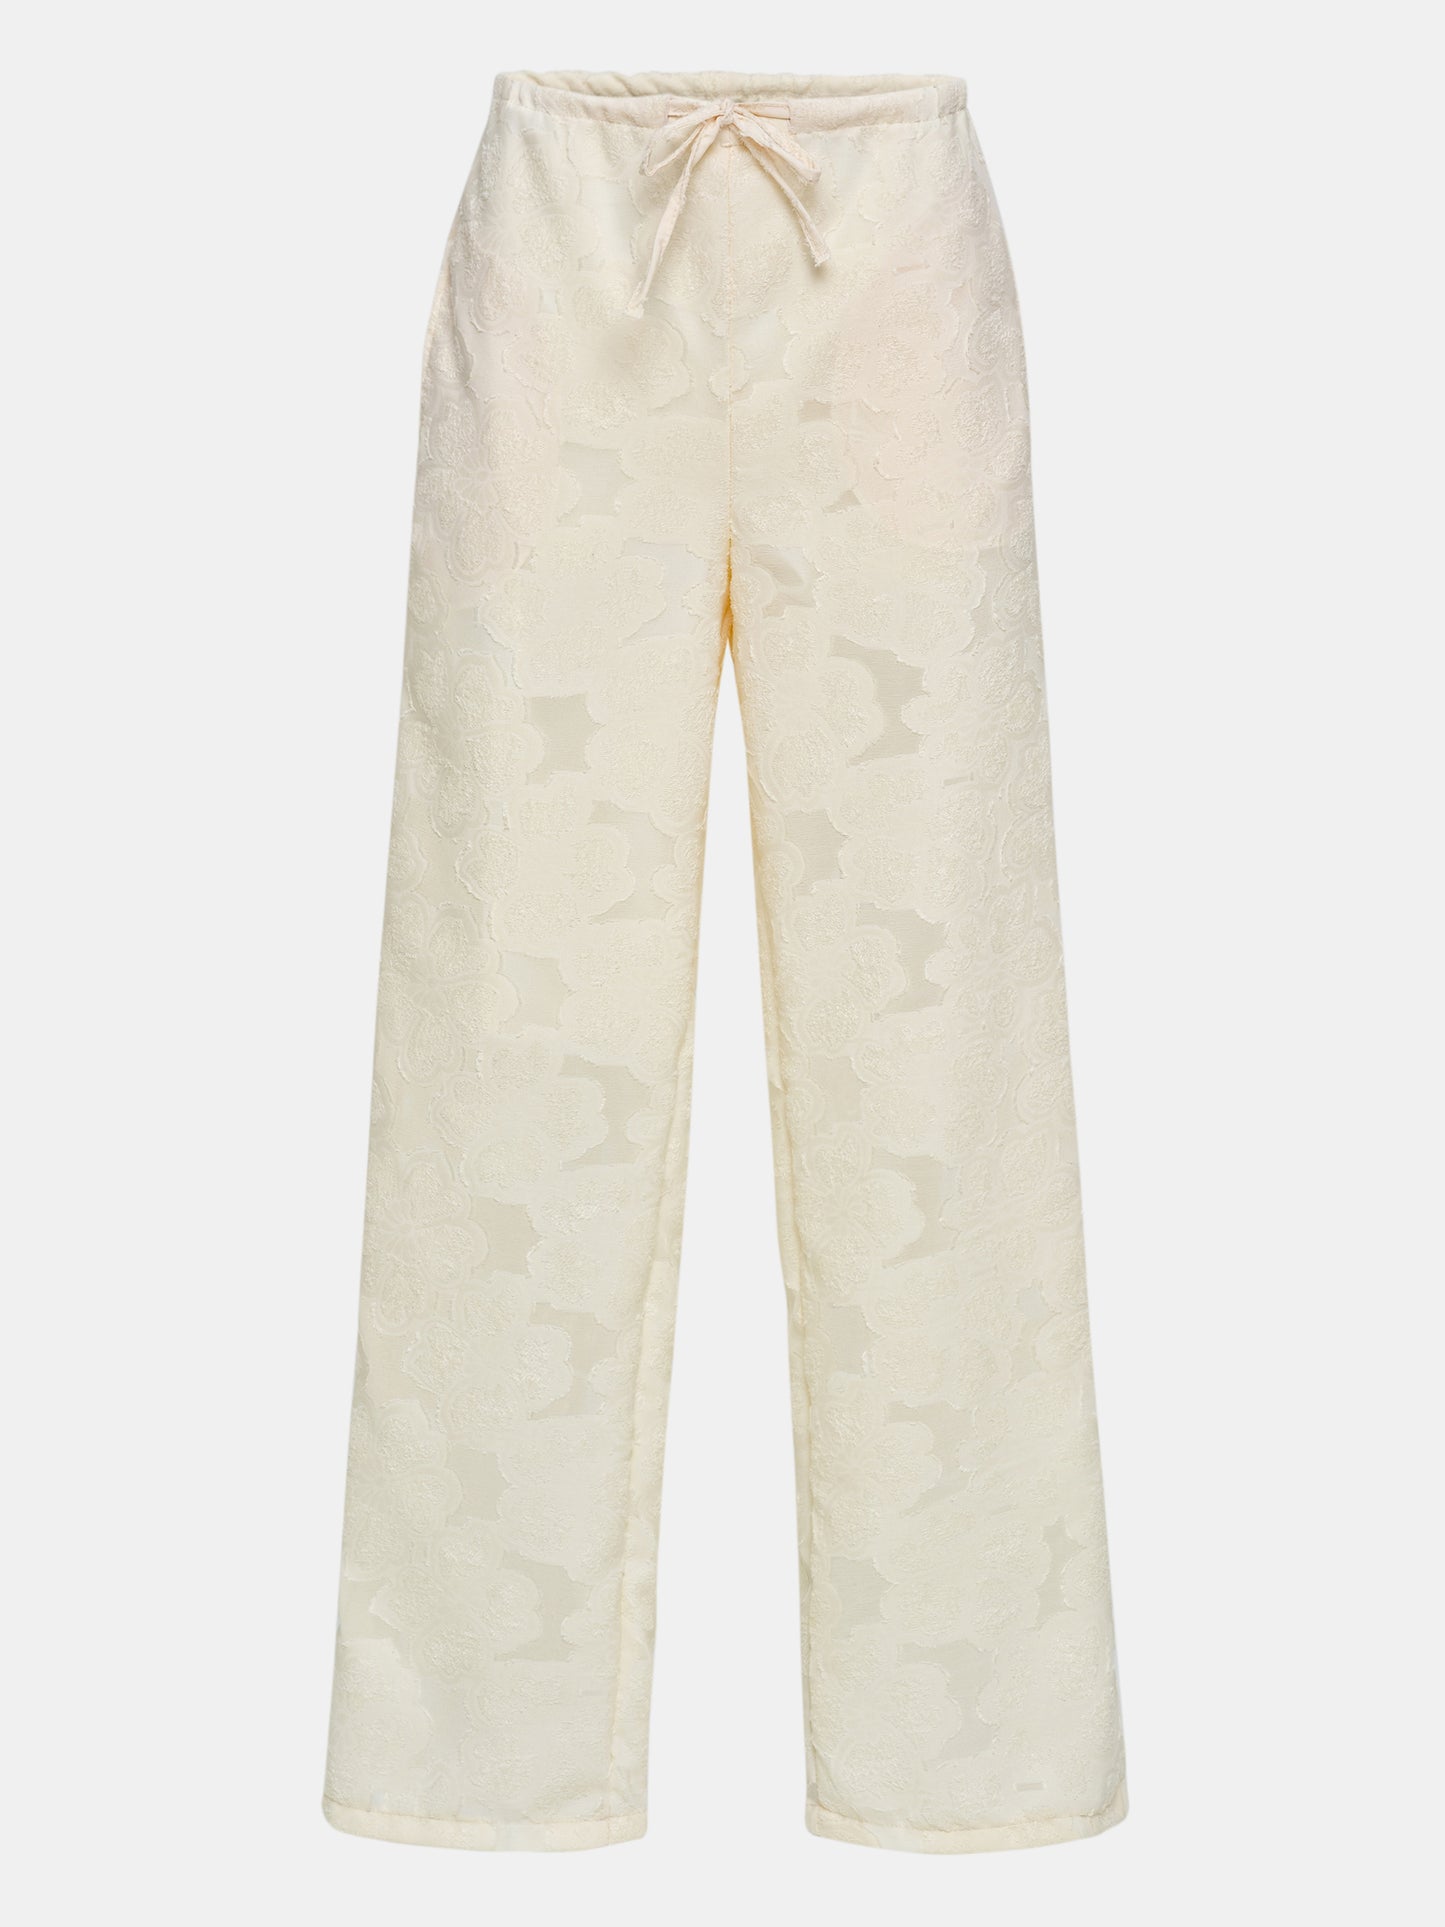 Drawstring Jacquard Pants, Ivory